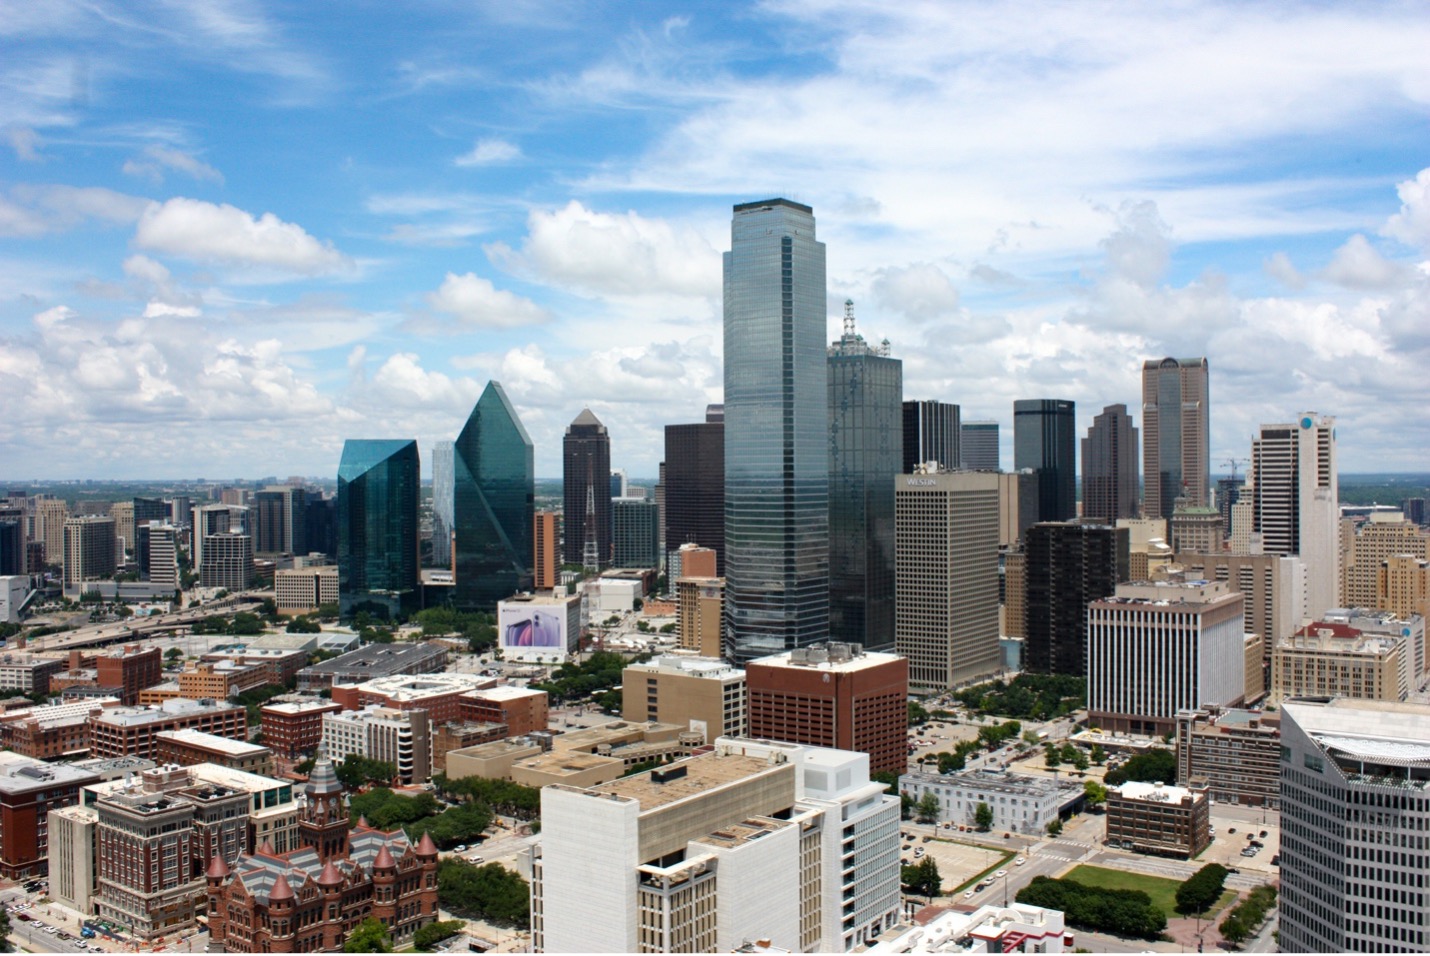 Read: Solar Installation in Dallas, Texas